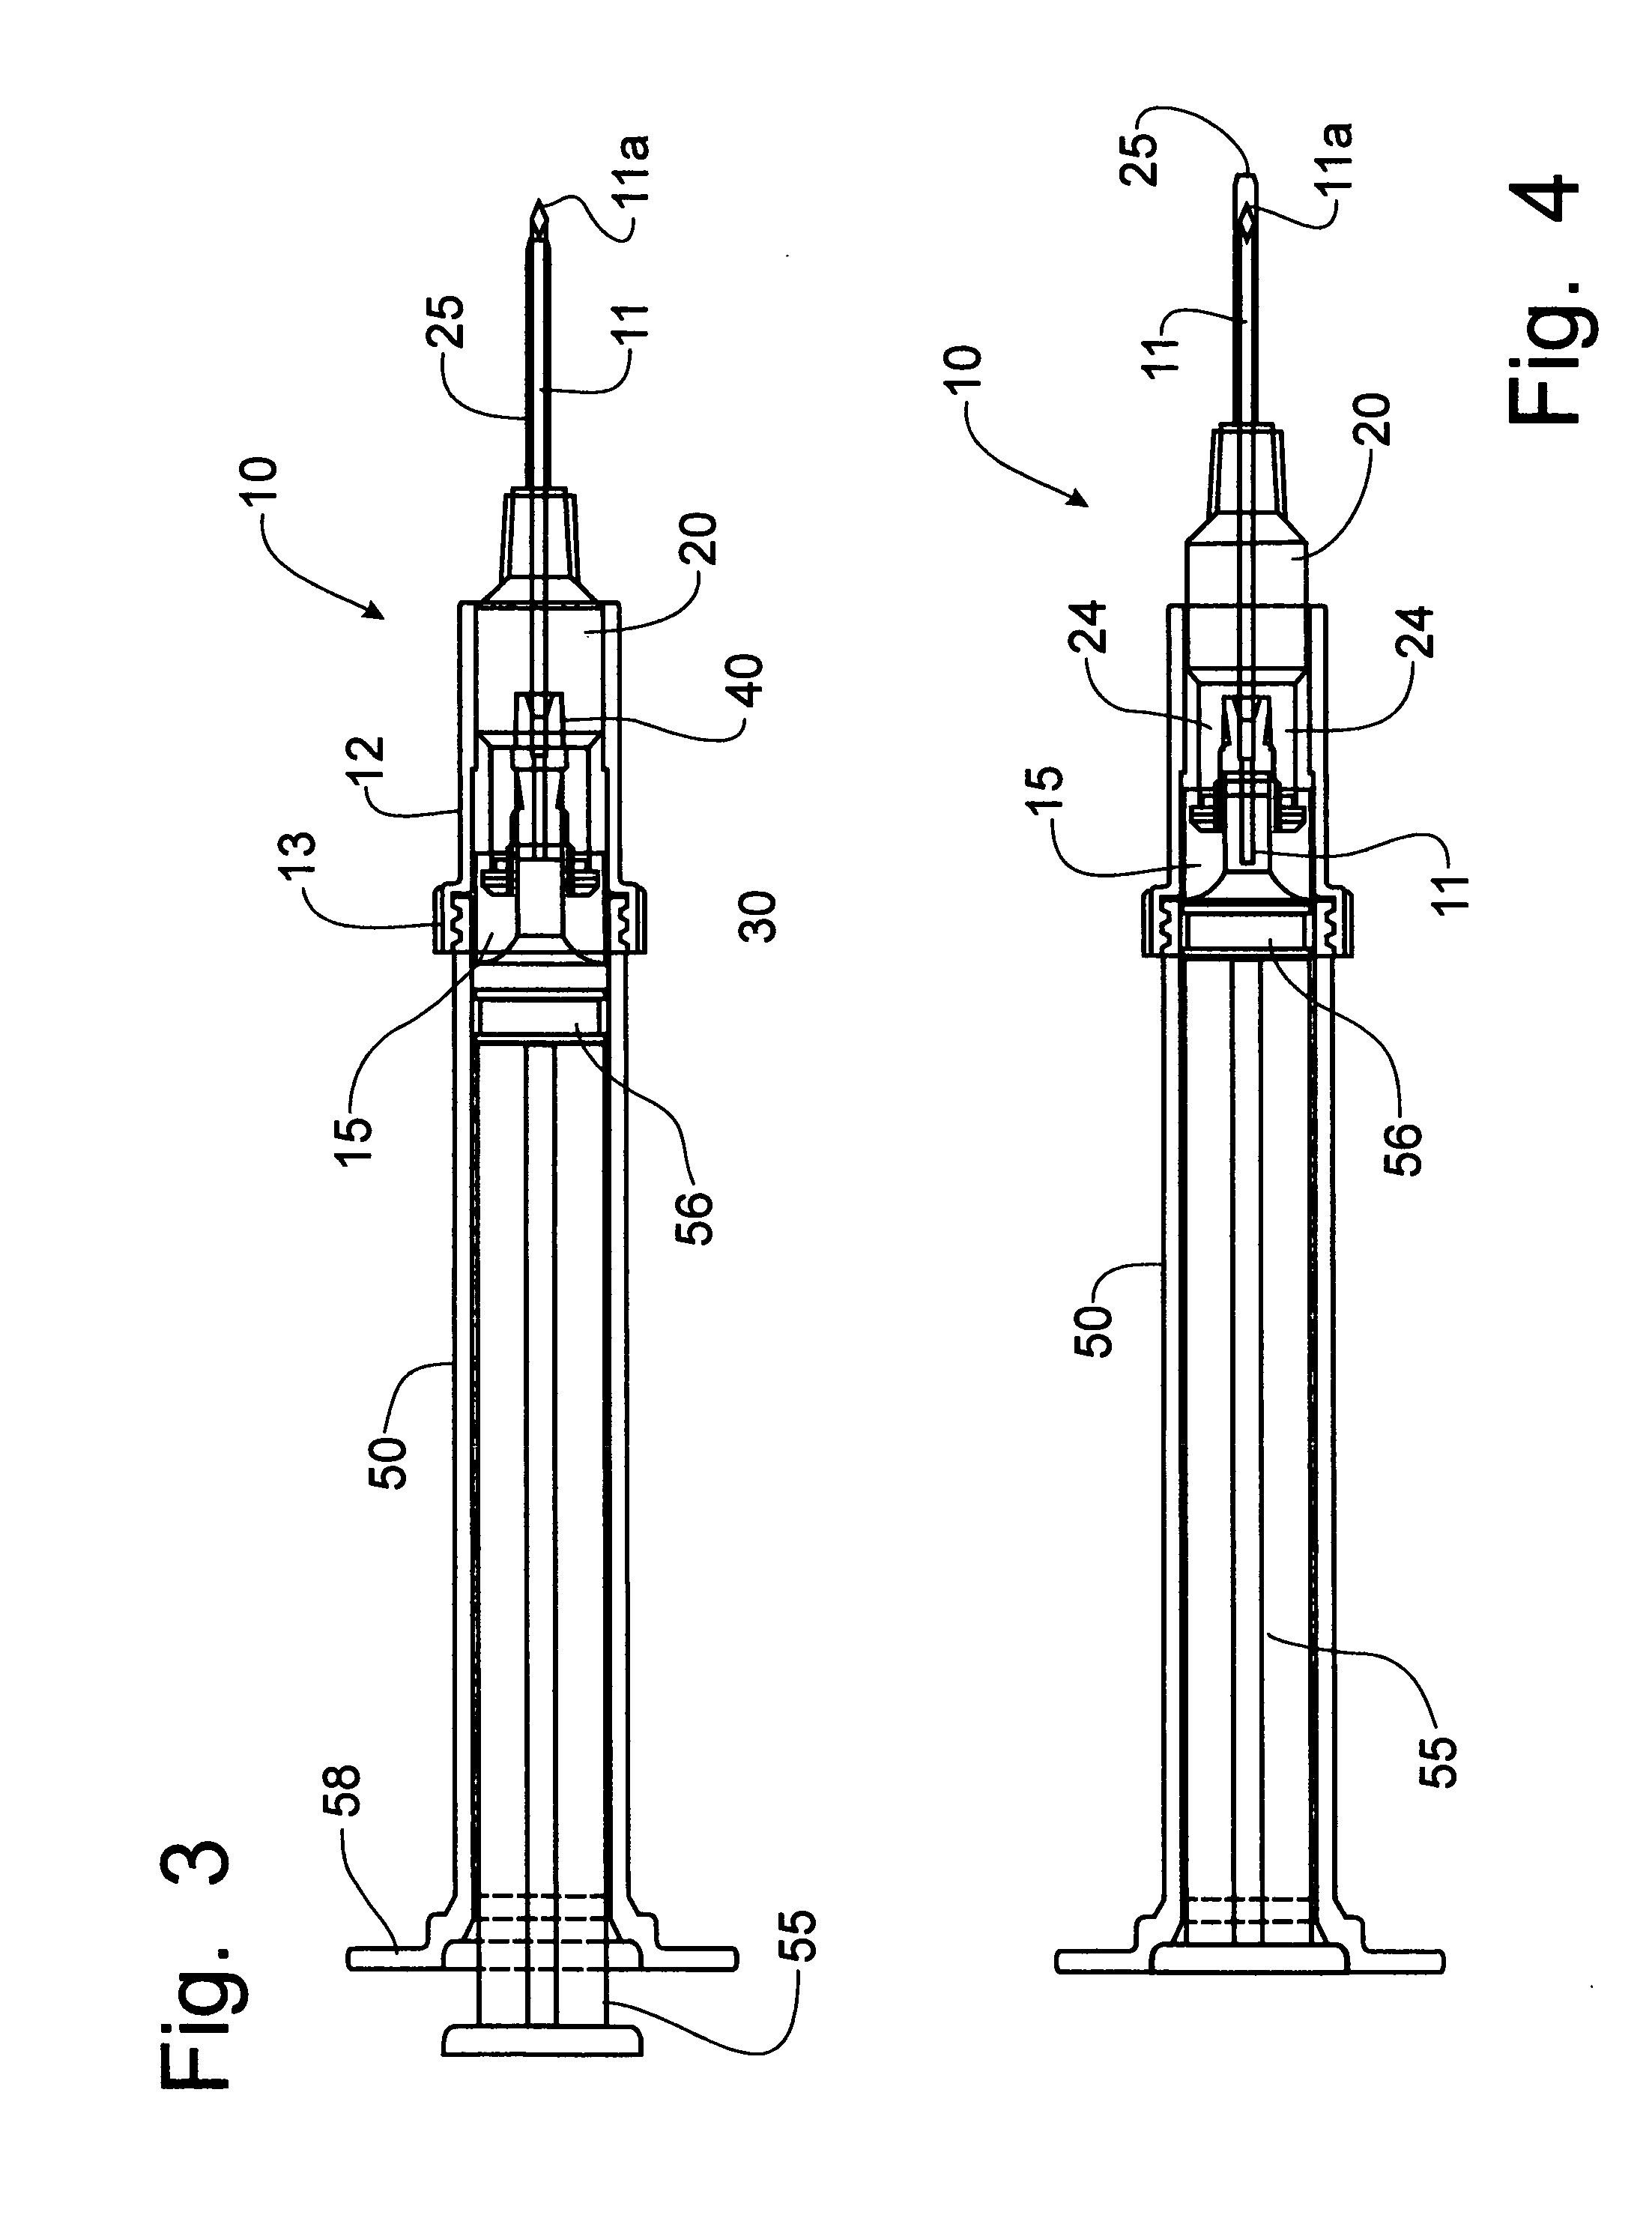 Needle assembly for multiple syringe barrels